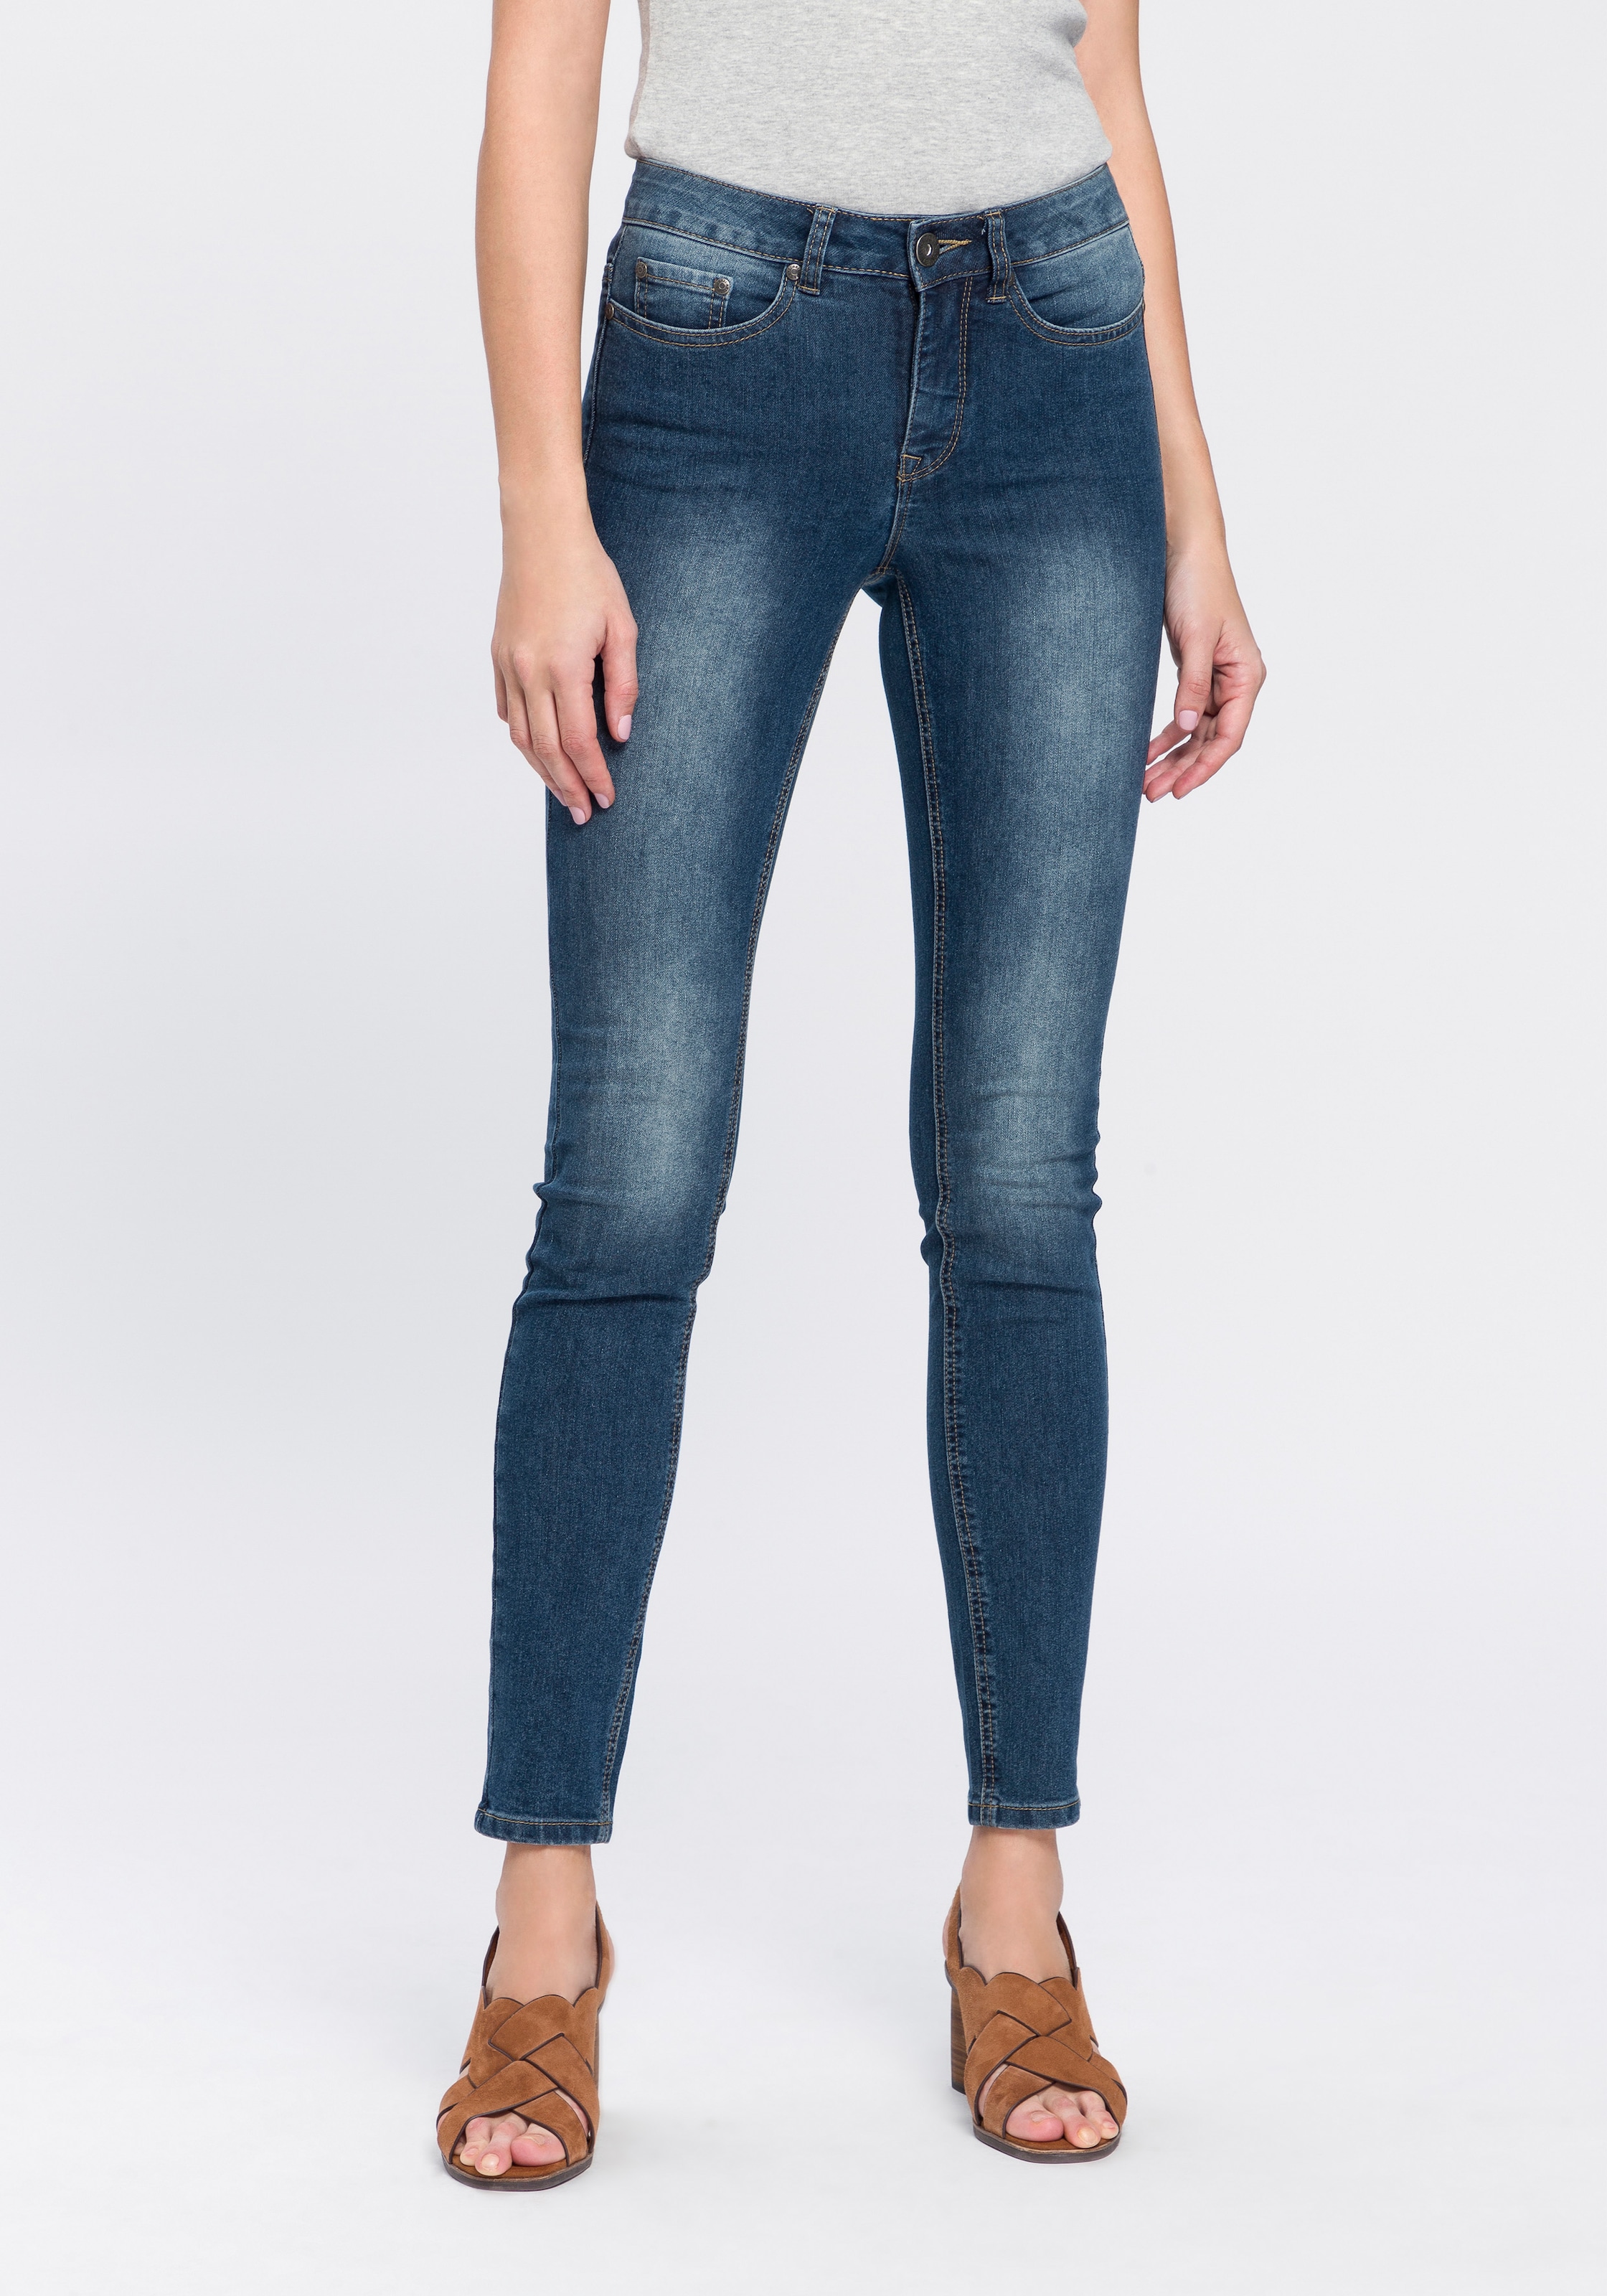 Arizona Skinny-fit-Jeans »Shaping«, High Waist